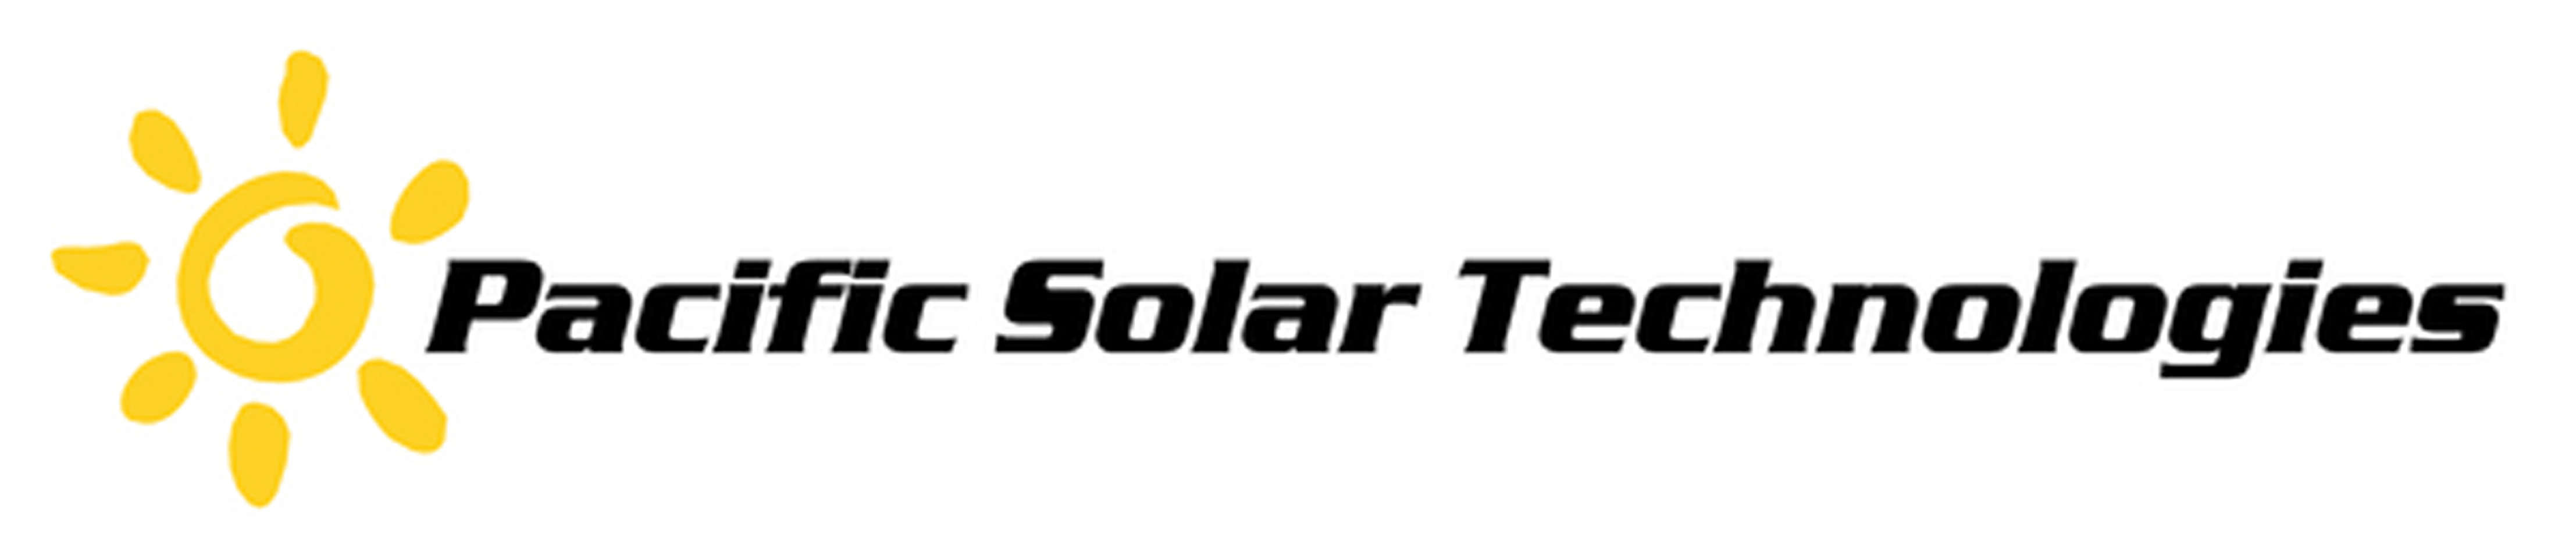 Pacific Solar Technologies LLC Logo